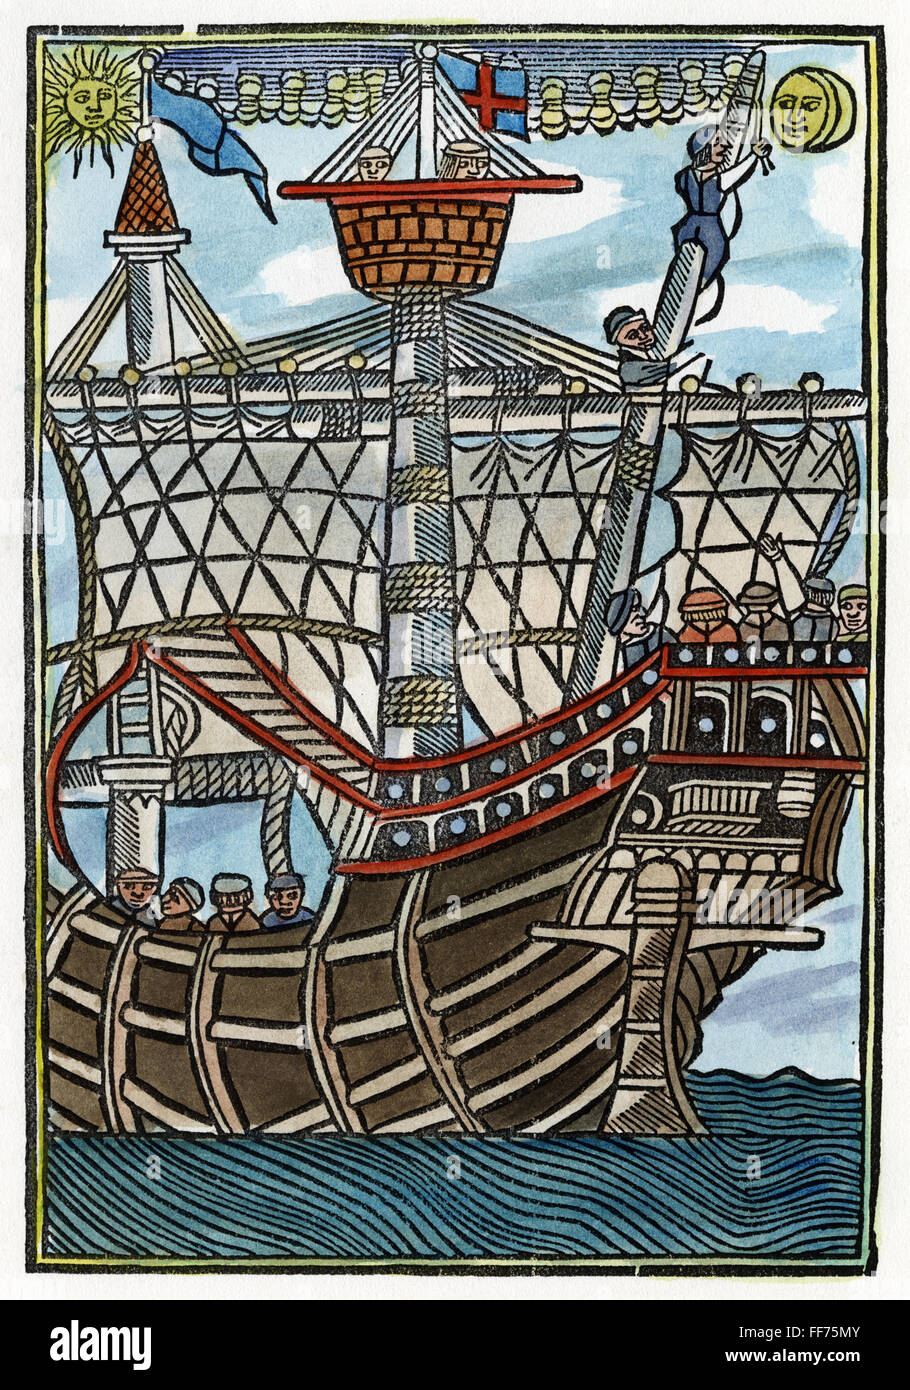 KARAVELLE, 1502. NUM spanische Karavelle. Holzschnitt aus "Libre de Cosolat Tractat Dels Fets Maritims," Barcelona, 1502. Stockfoto